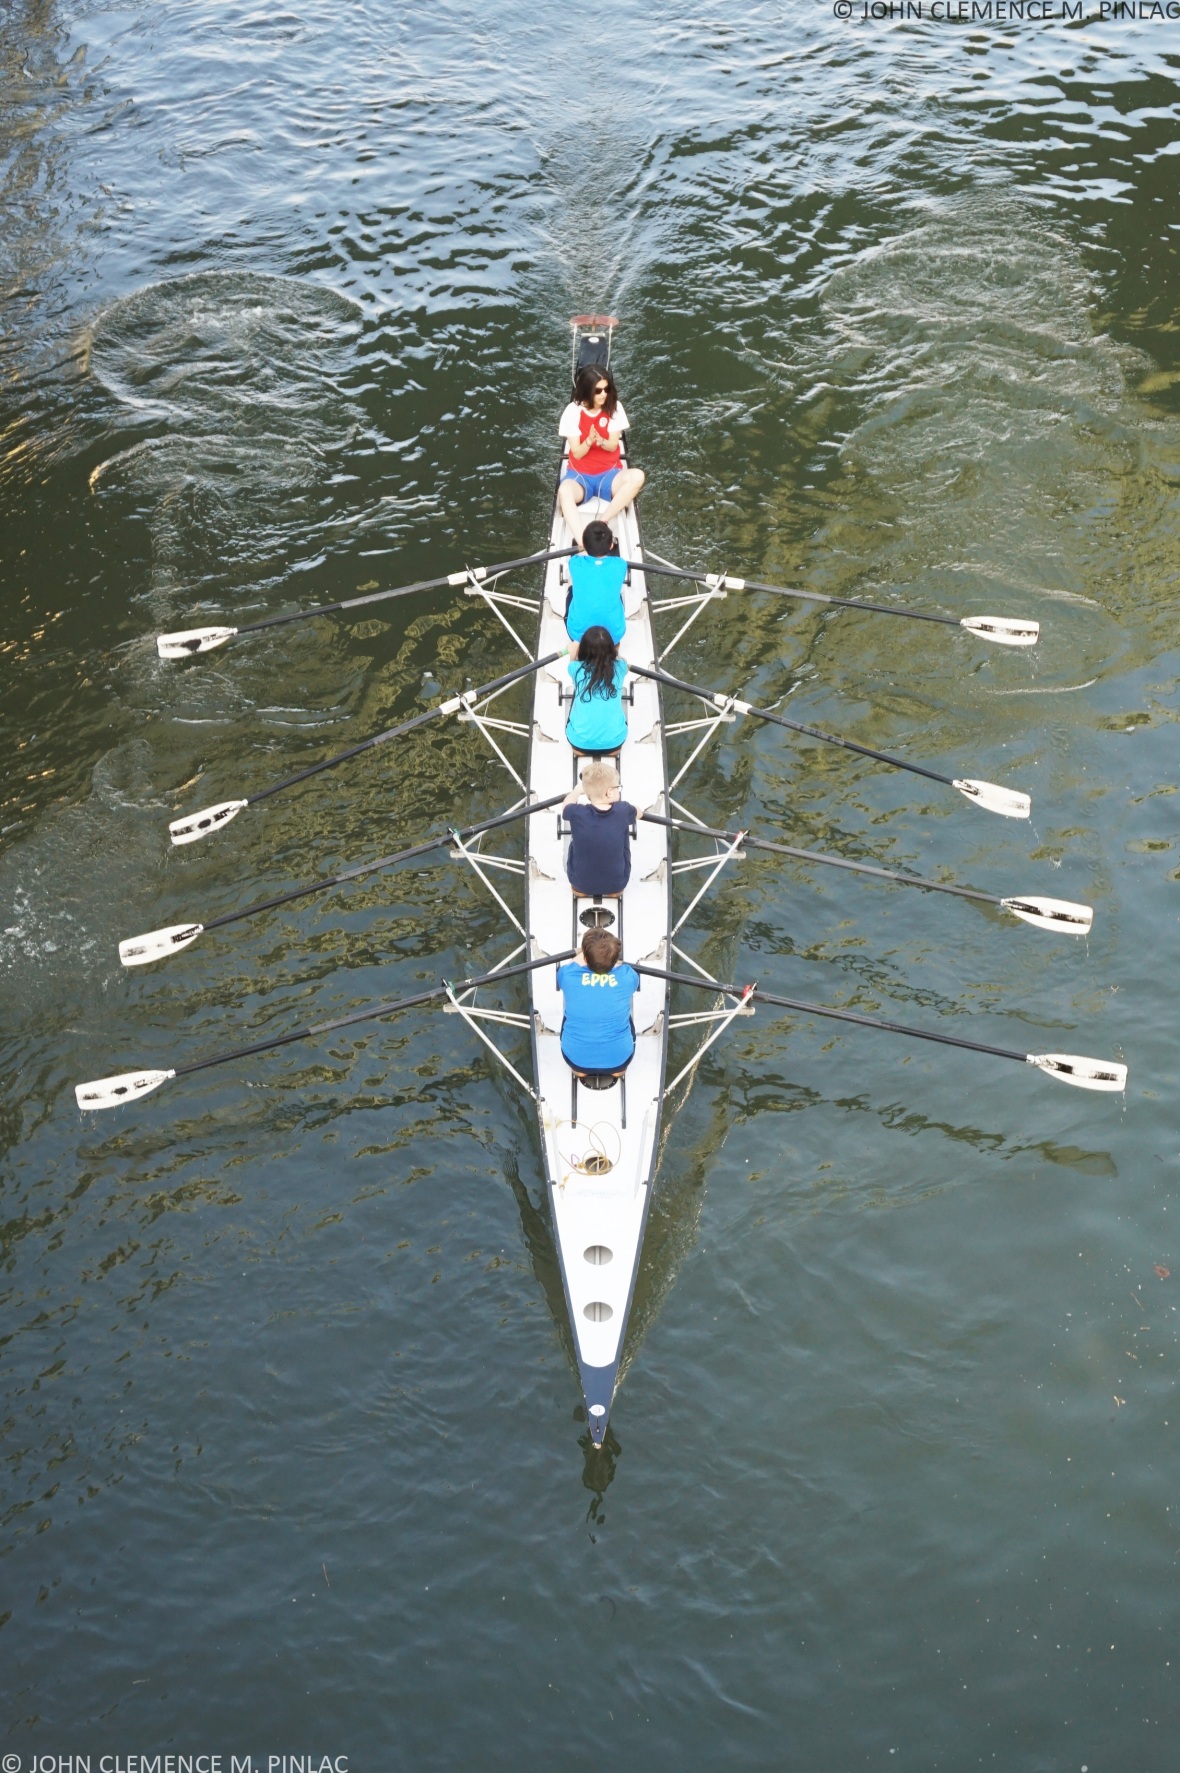 Rowing photo essay